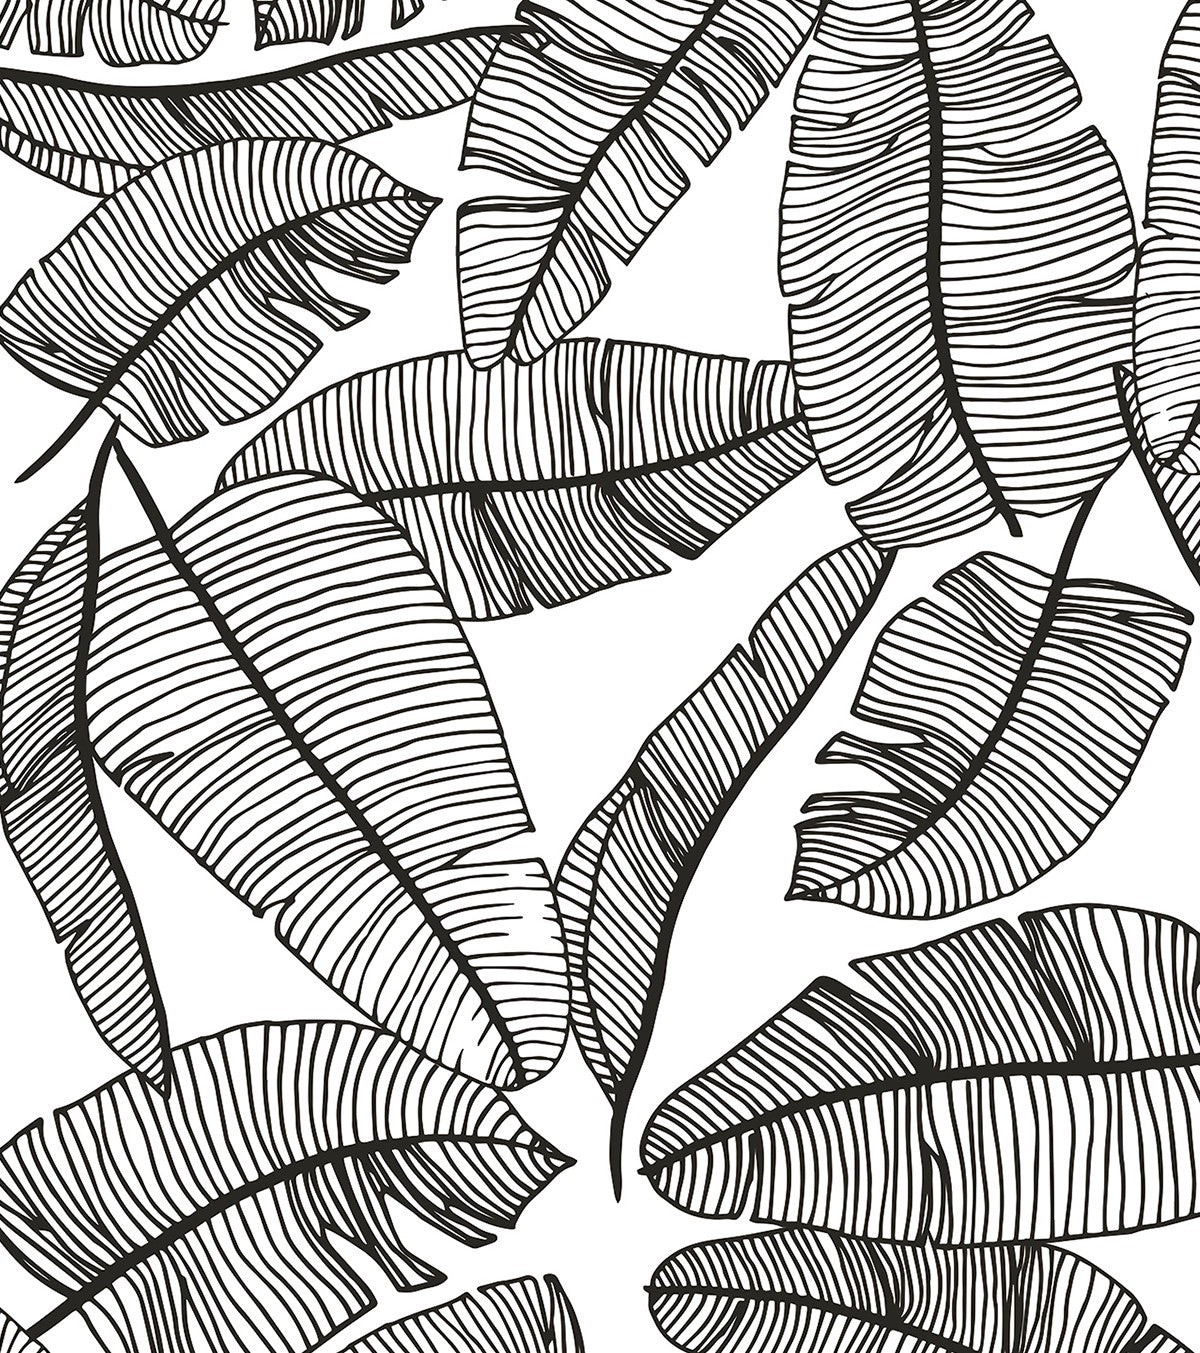 SERENGETI - Children's wallpaper - Tropical leaves motif